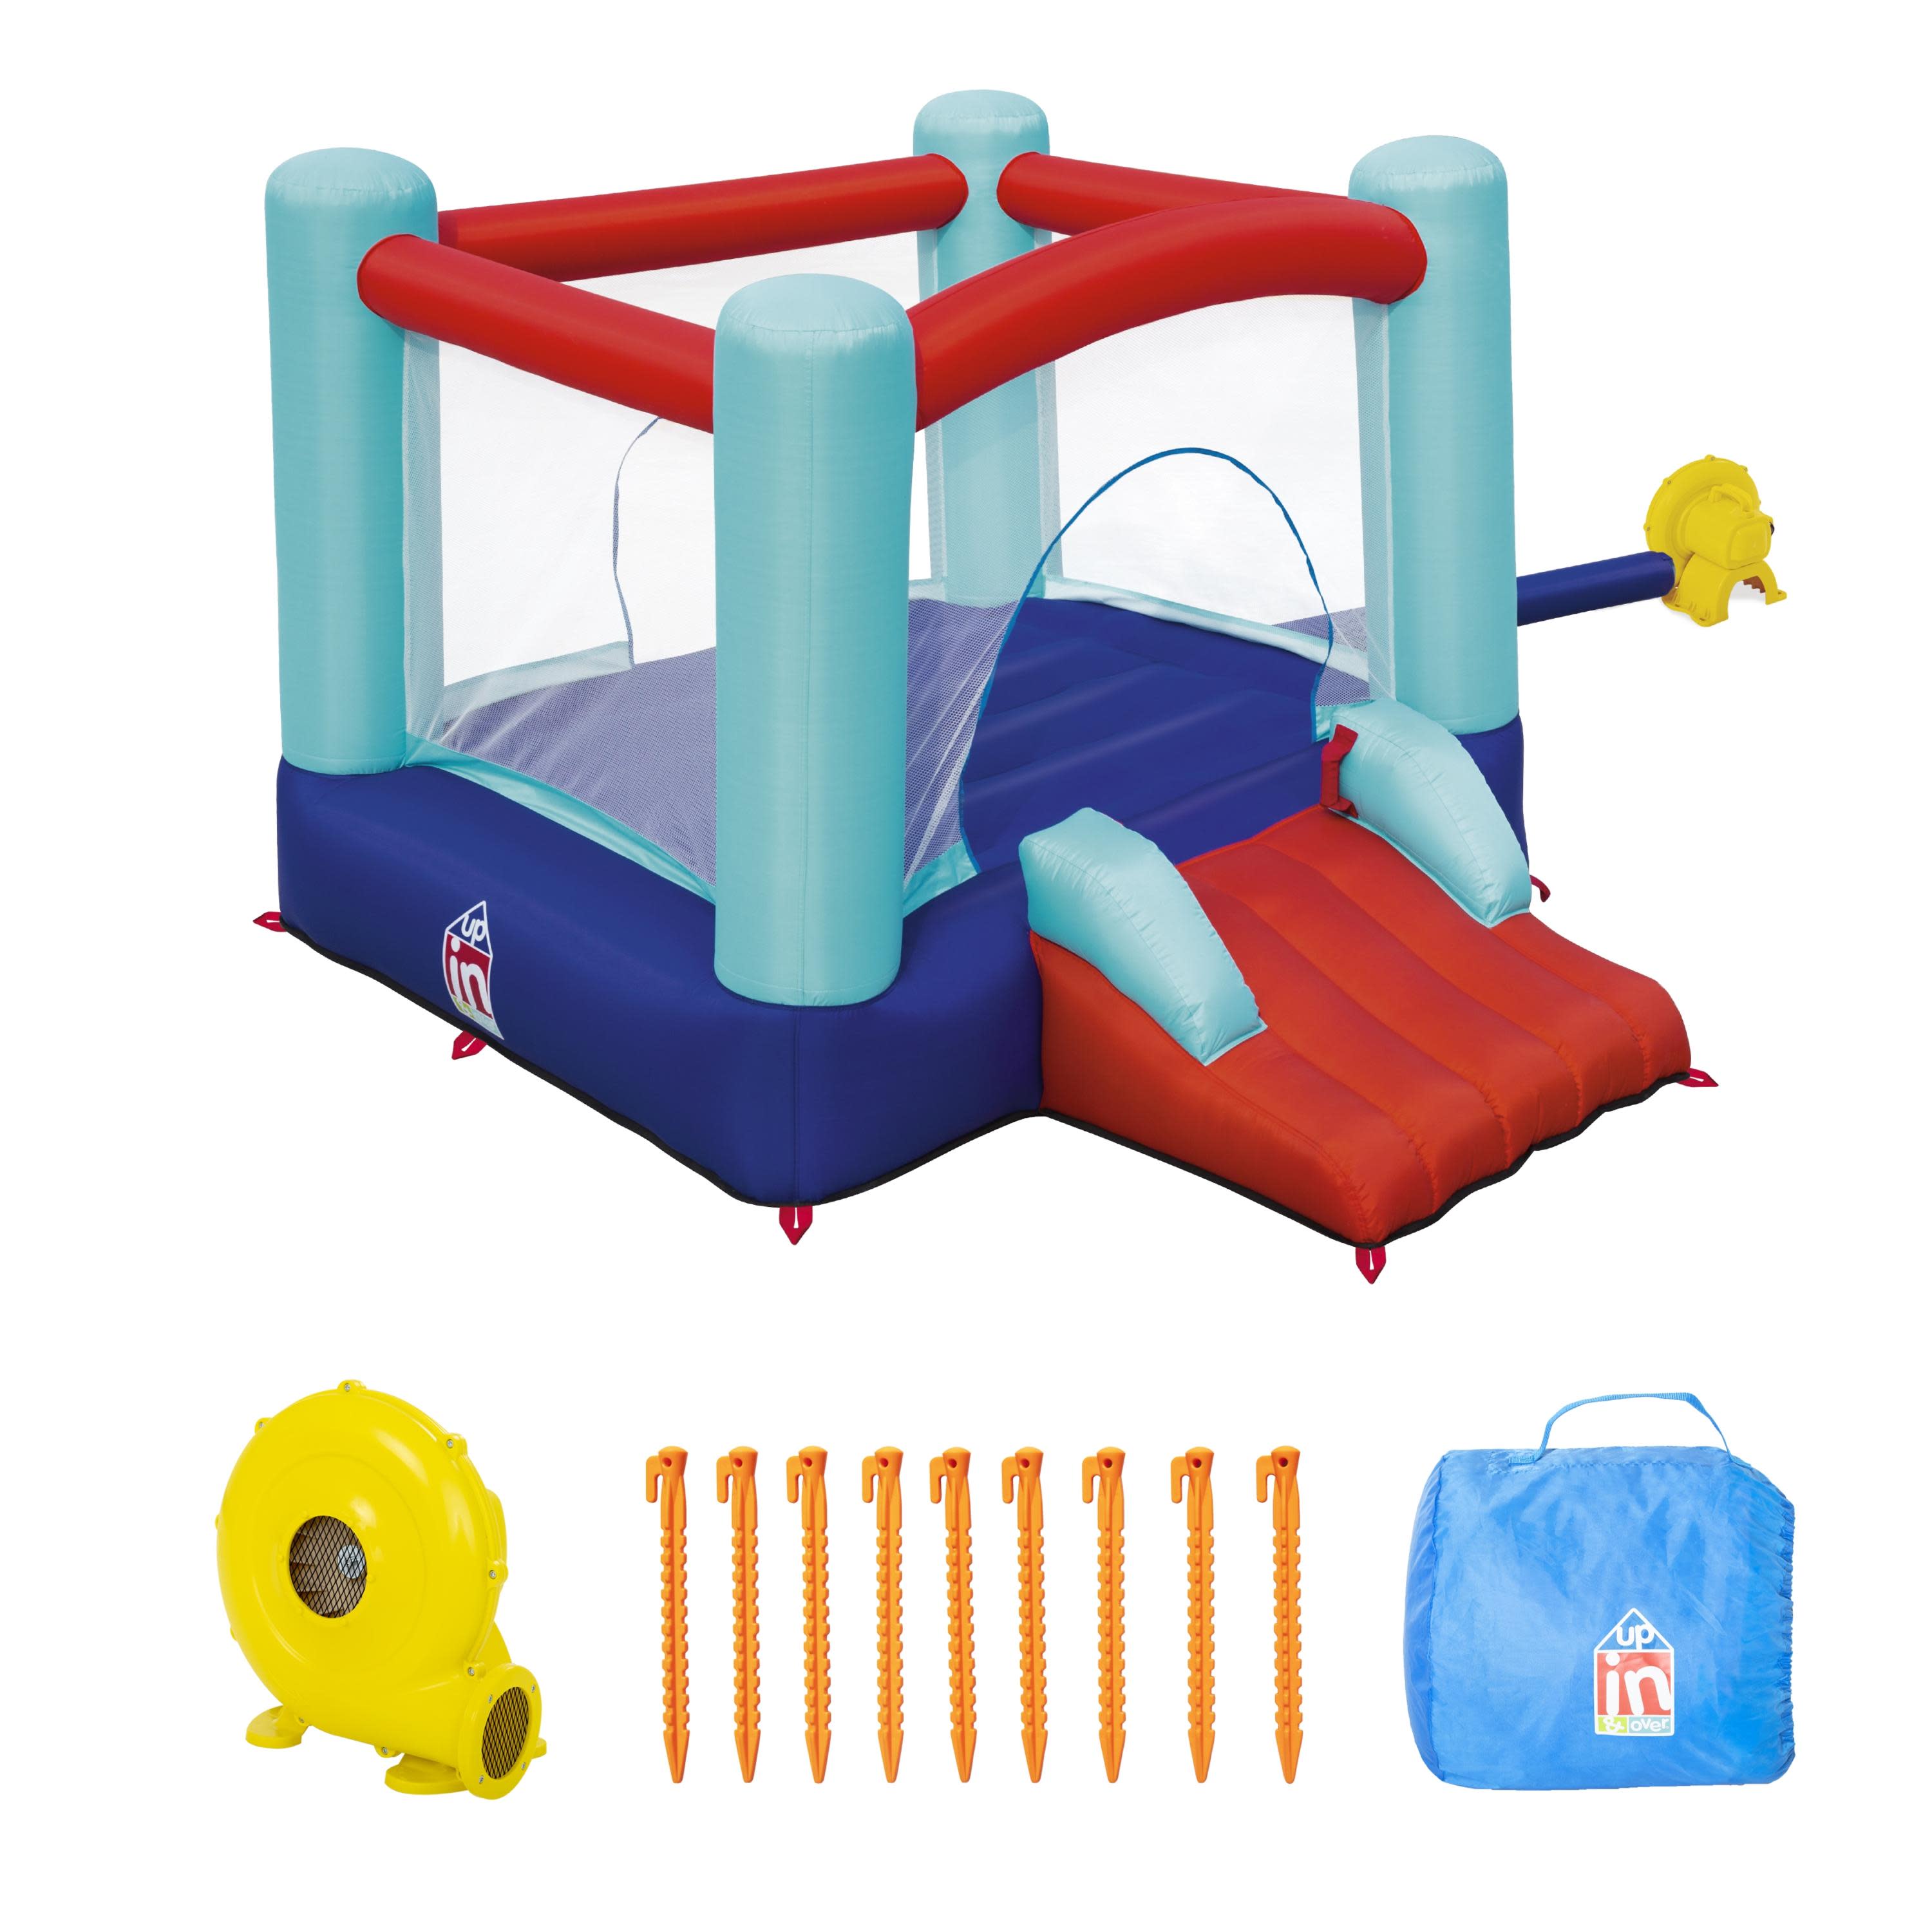 Bestway Spring 'n Slide Park Inflatable Bounce House - image 4 of 17